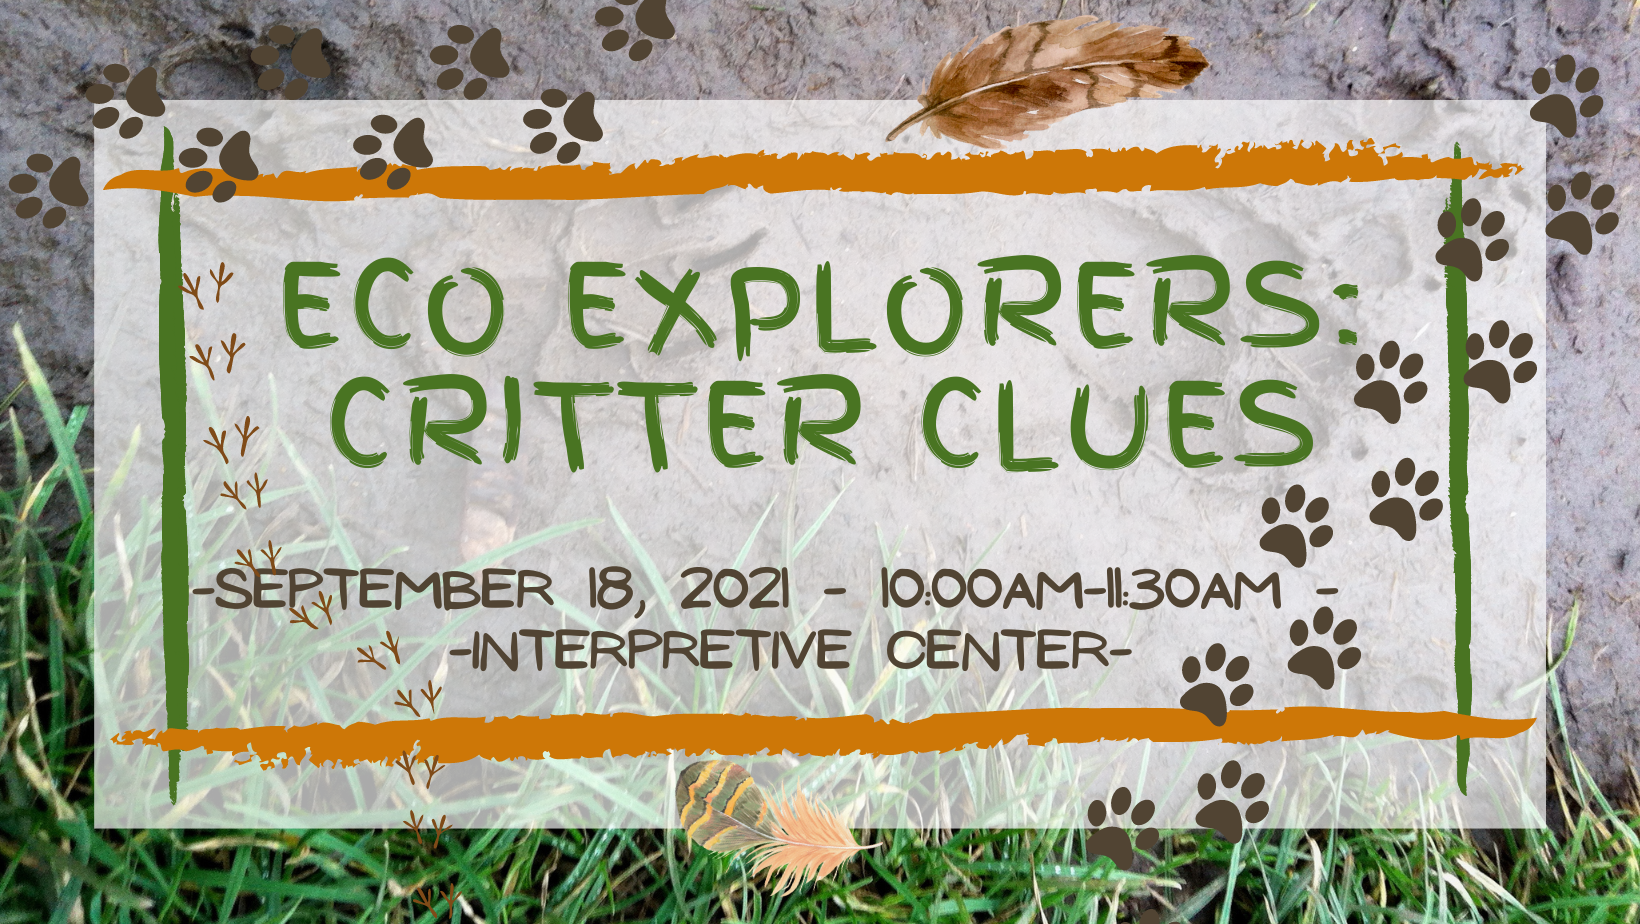 CSP 2021 September Eco Explorers: Critter Clues B